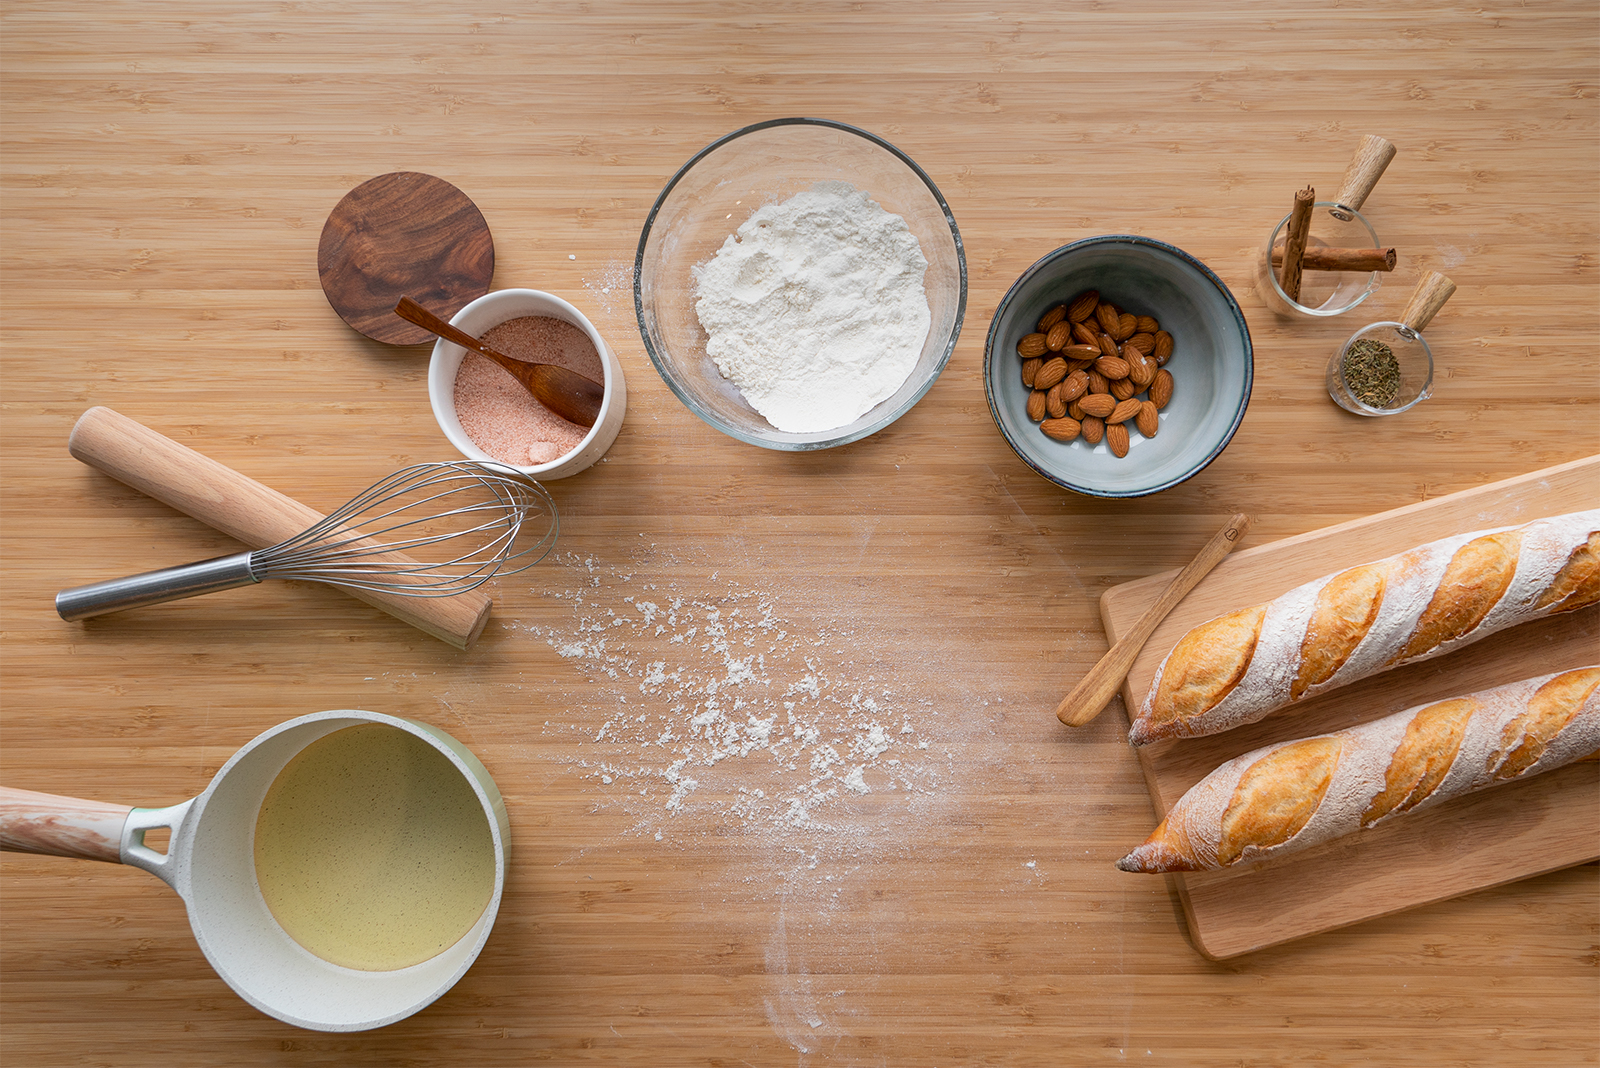 bread secret 選用全天然食材來做麵包